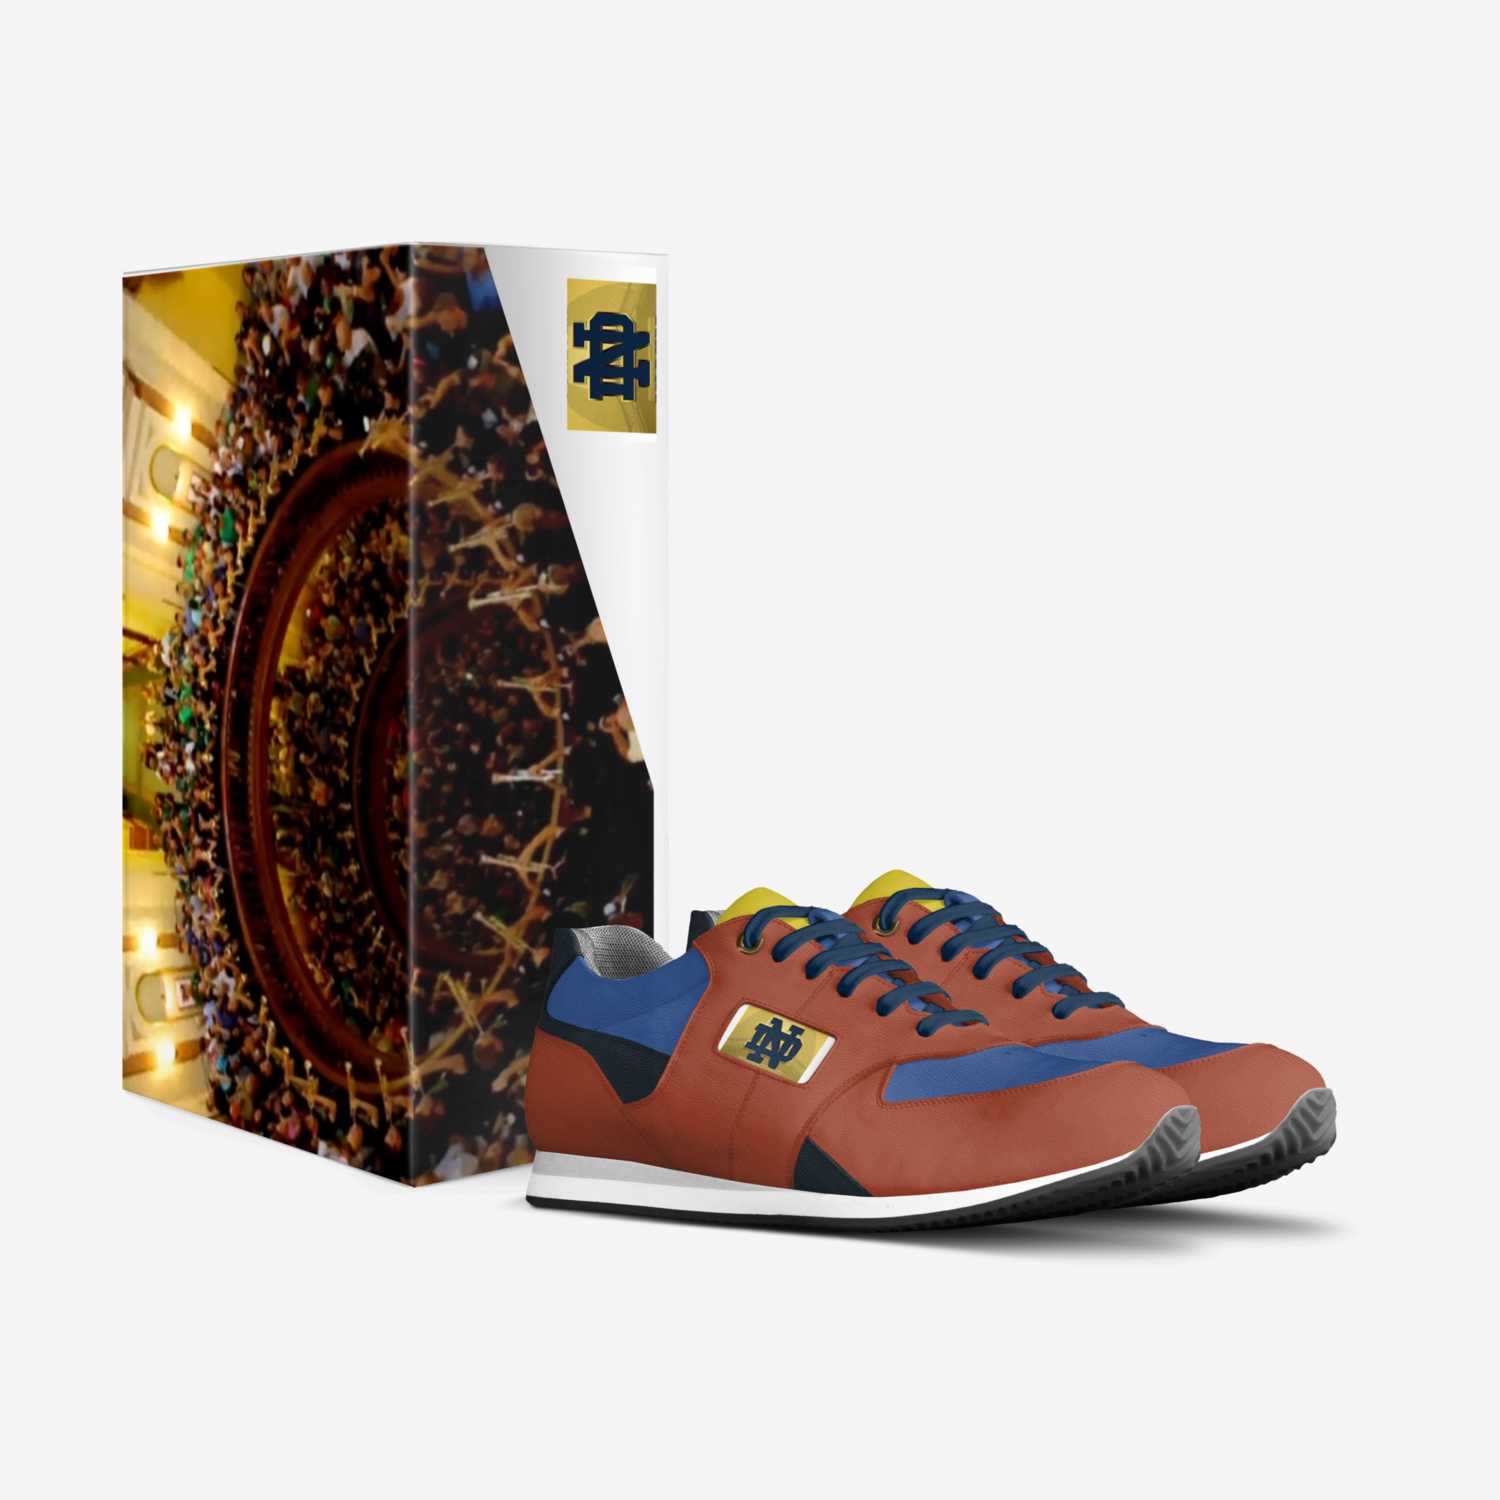 GO IRISH  custom made in Italy shoes by Joshua Hasty | Box view